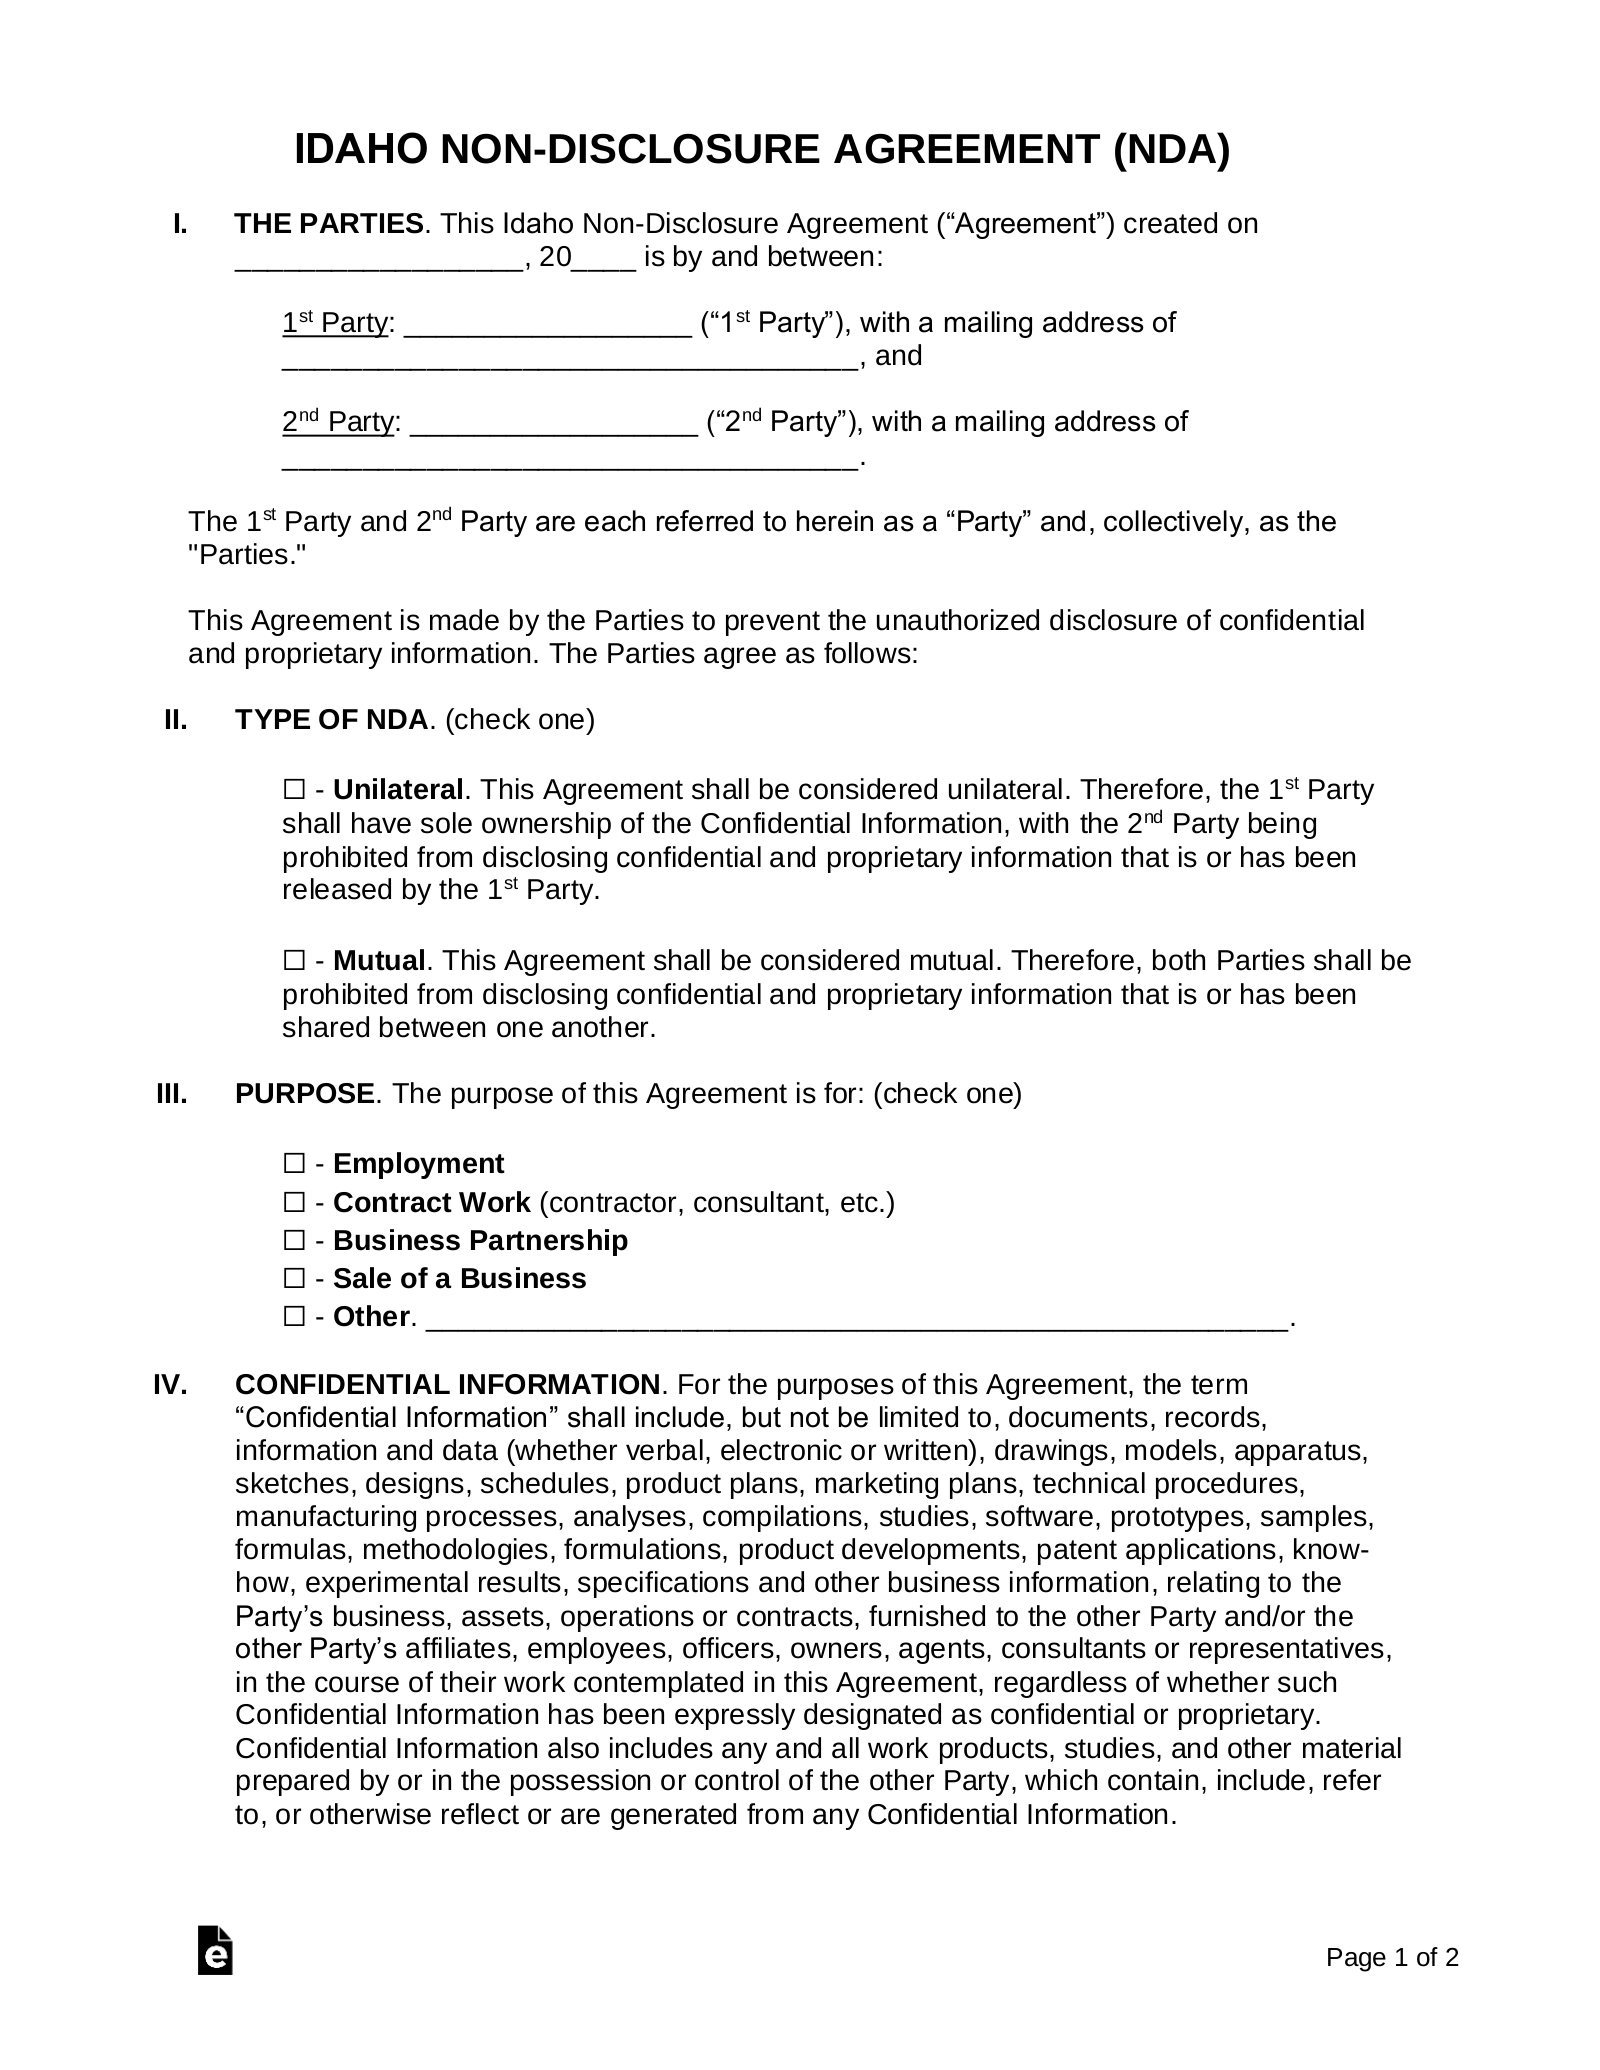 Idaho Non-Disclosure Agreement (NDA) Template